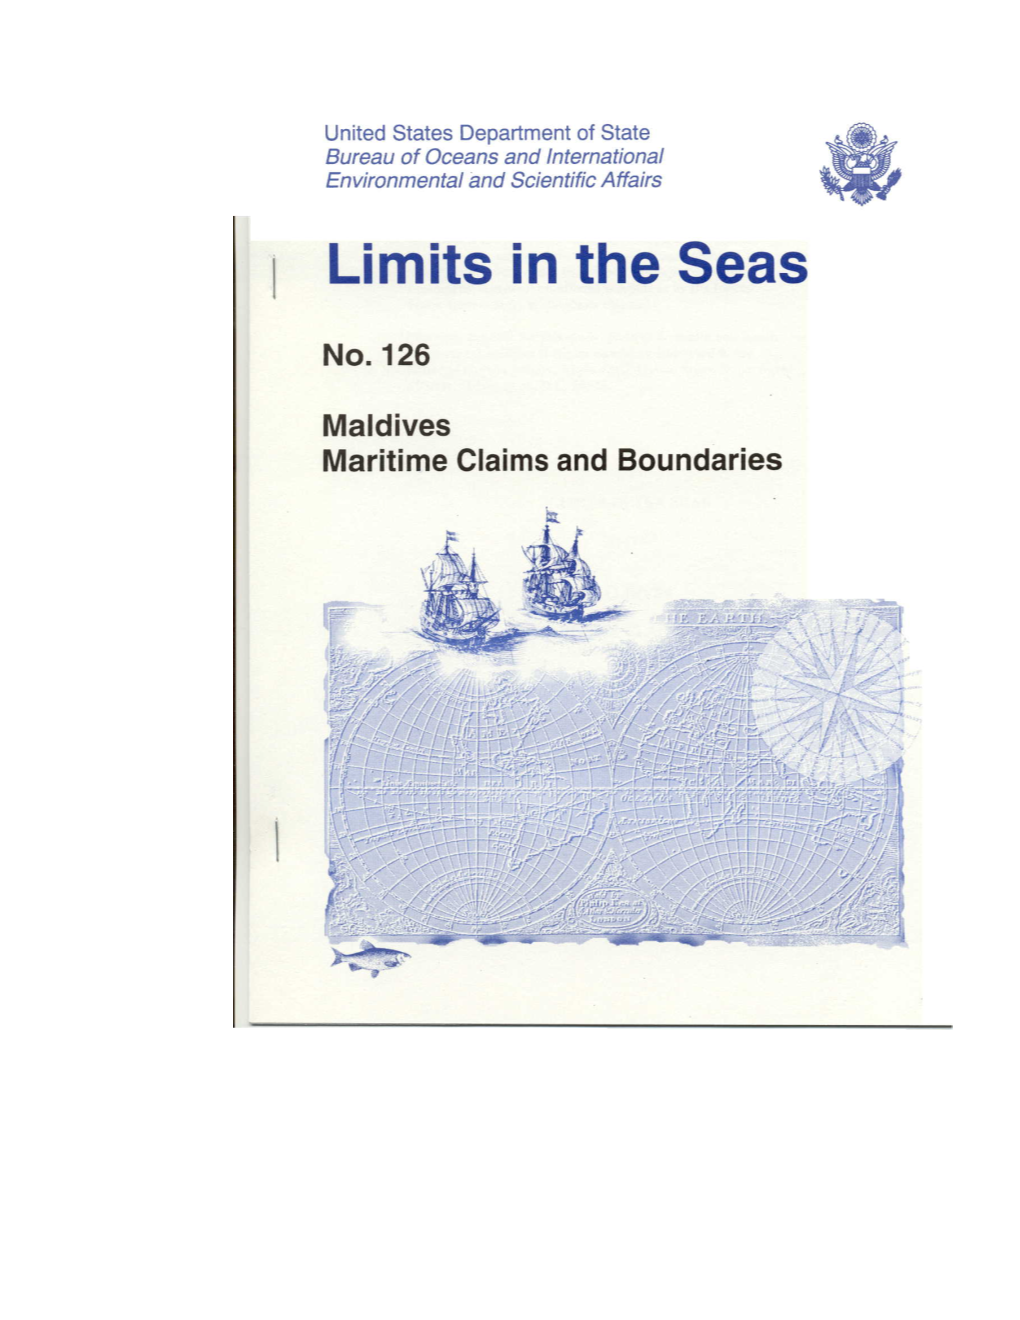 Maldives Maritime Claims and Boundaries